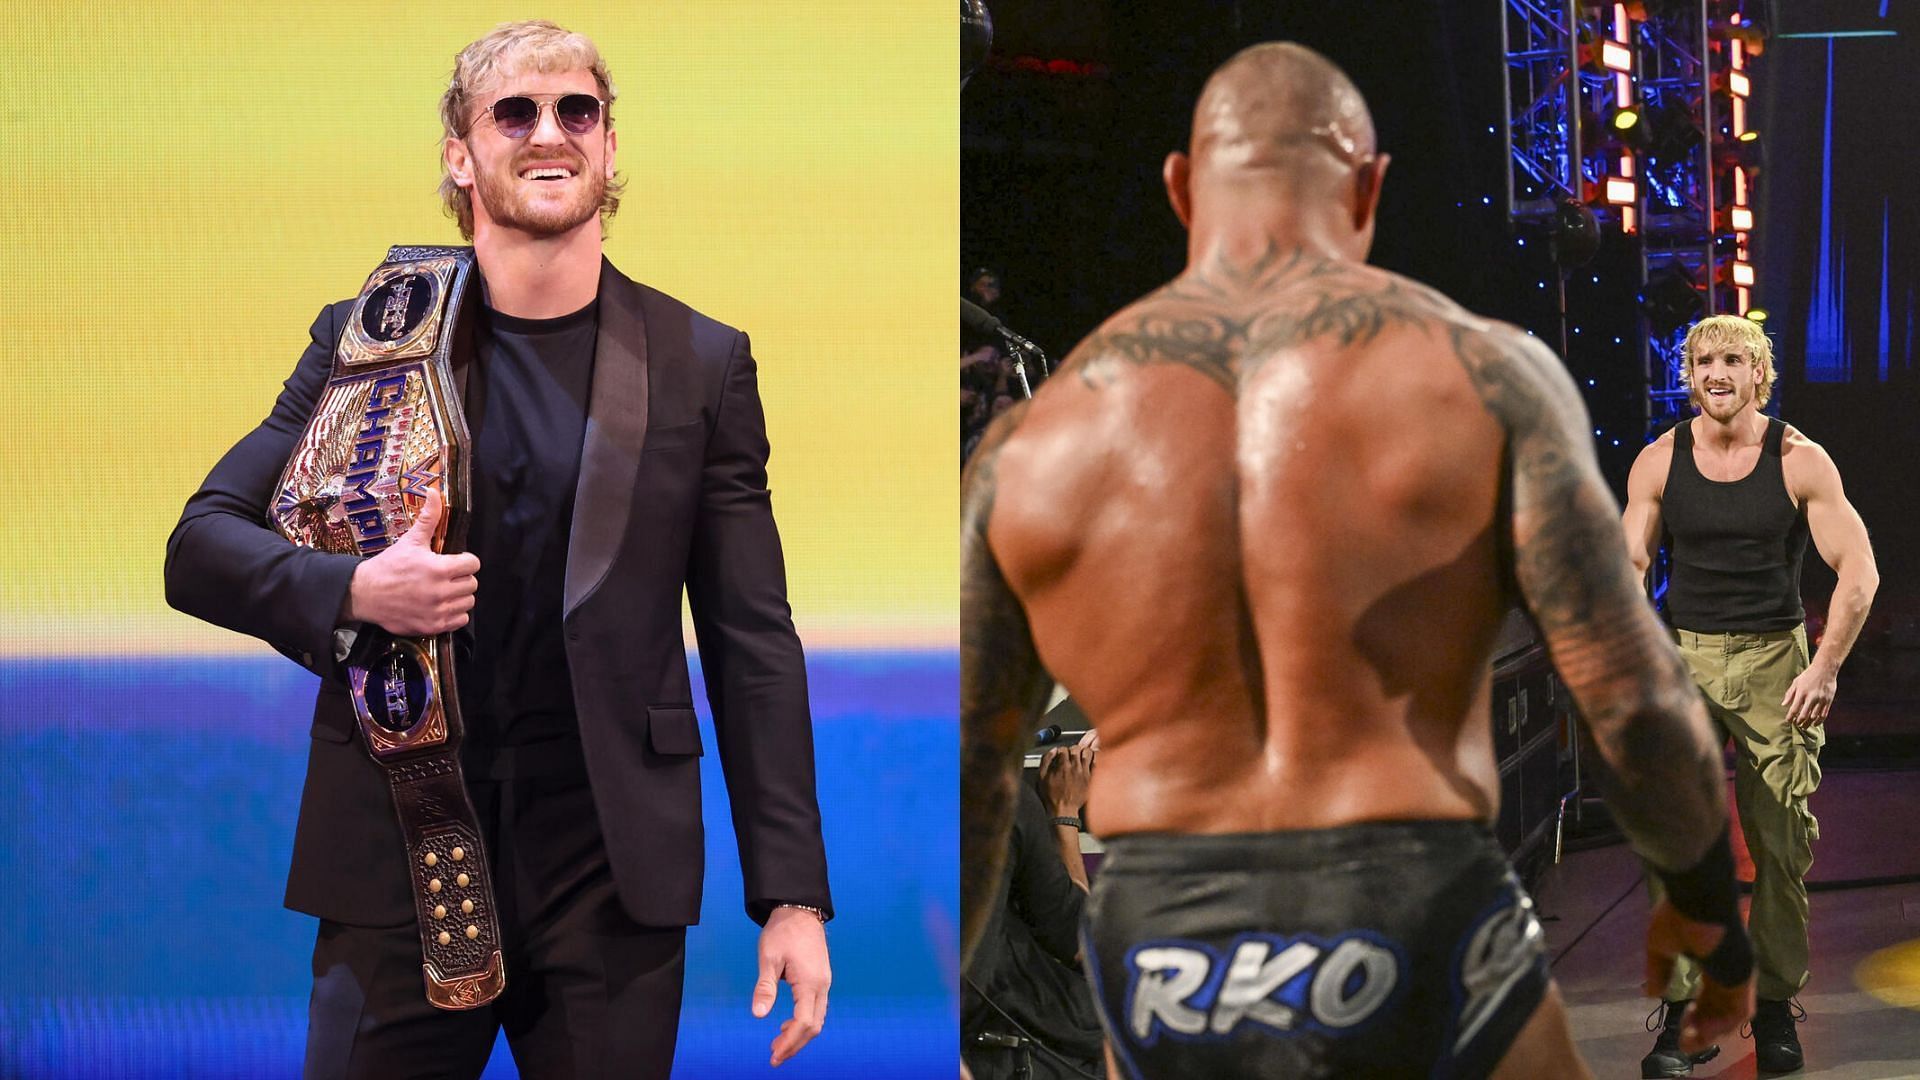 Logan Paul will defend US Title against Randy Orton (Credit: WWE)